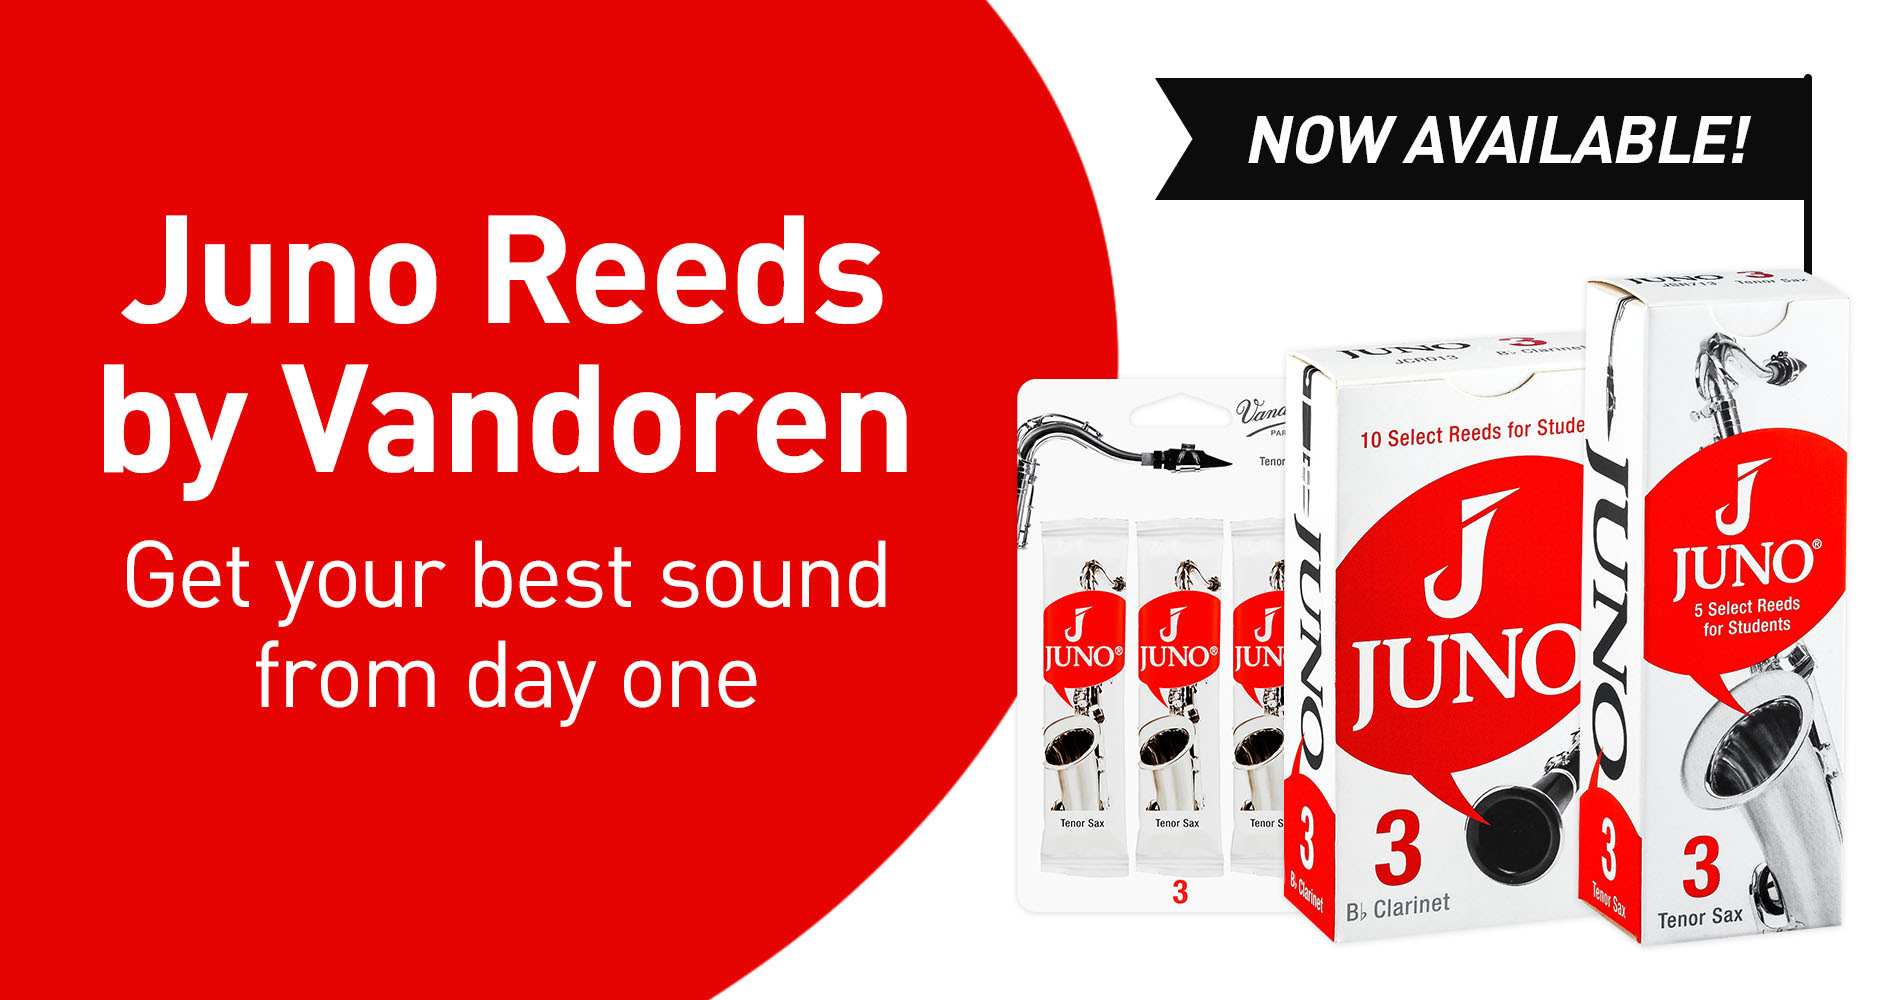 Juno Reeds by Vandoren – Get Your Best Sound from Day One